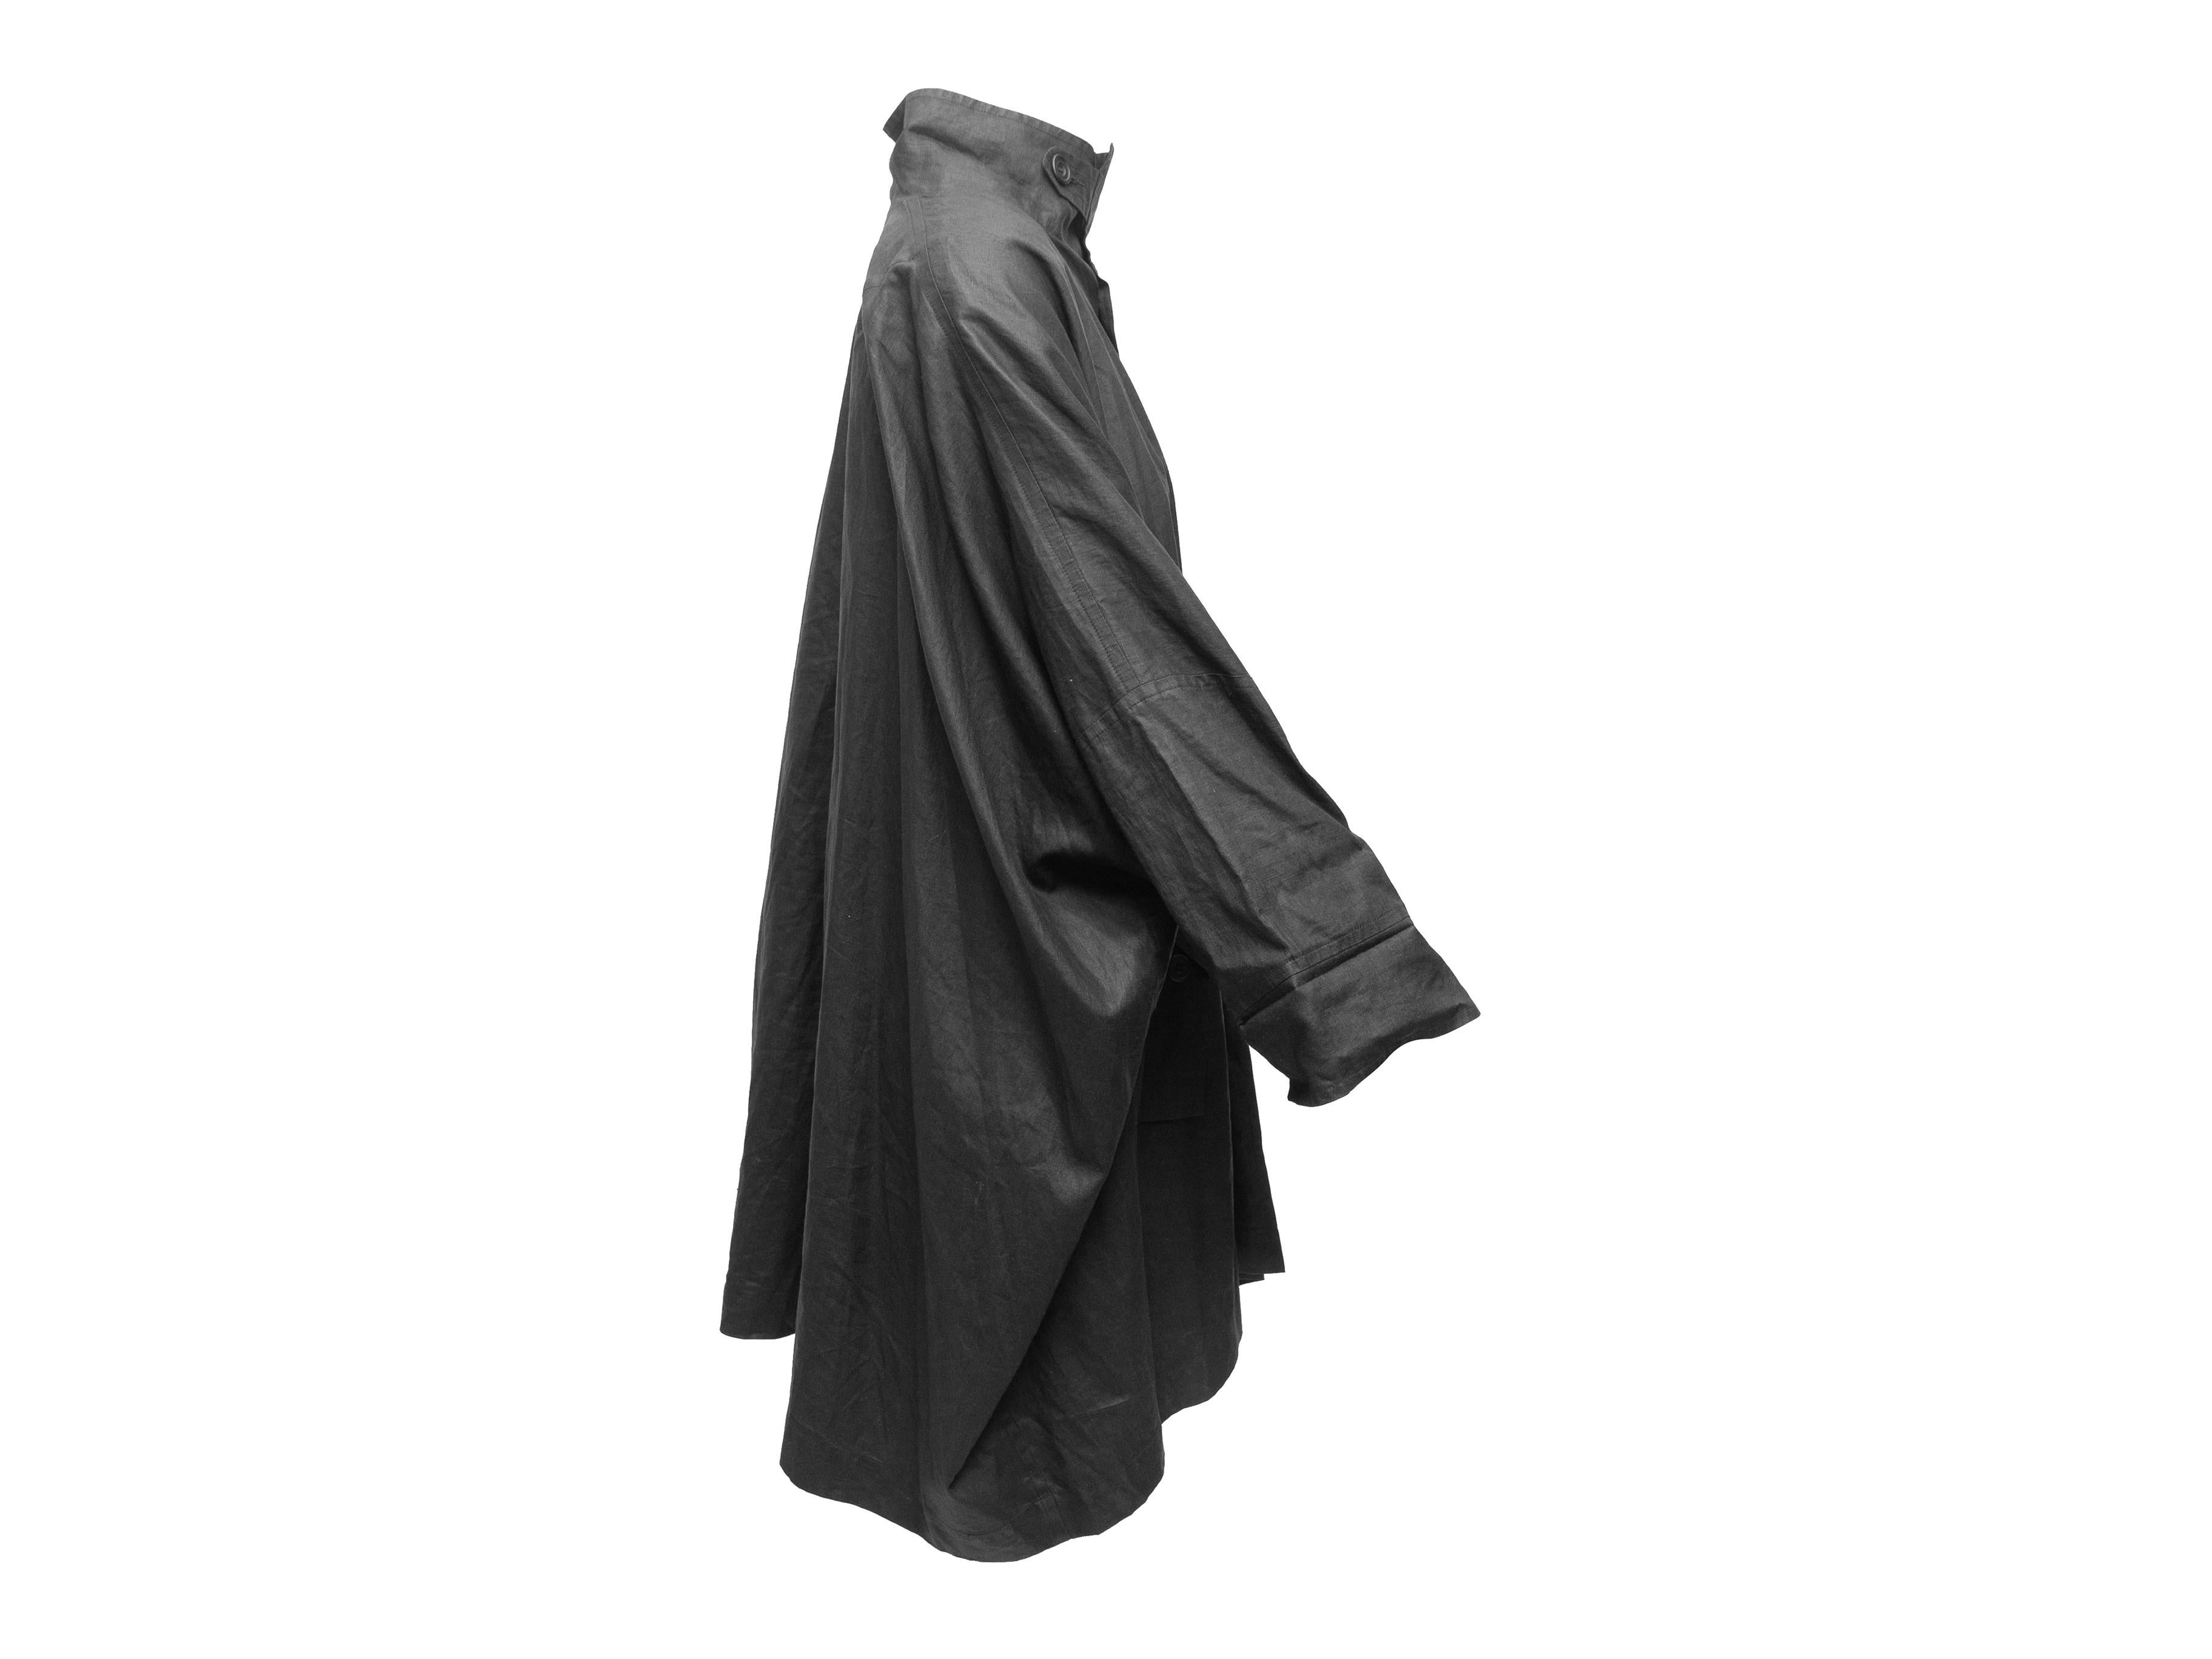 Product details: Black lightweight linen-blend coat by Eskandar. Stand collar. Dual hip pockets. Button closures at center front. 39